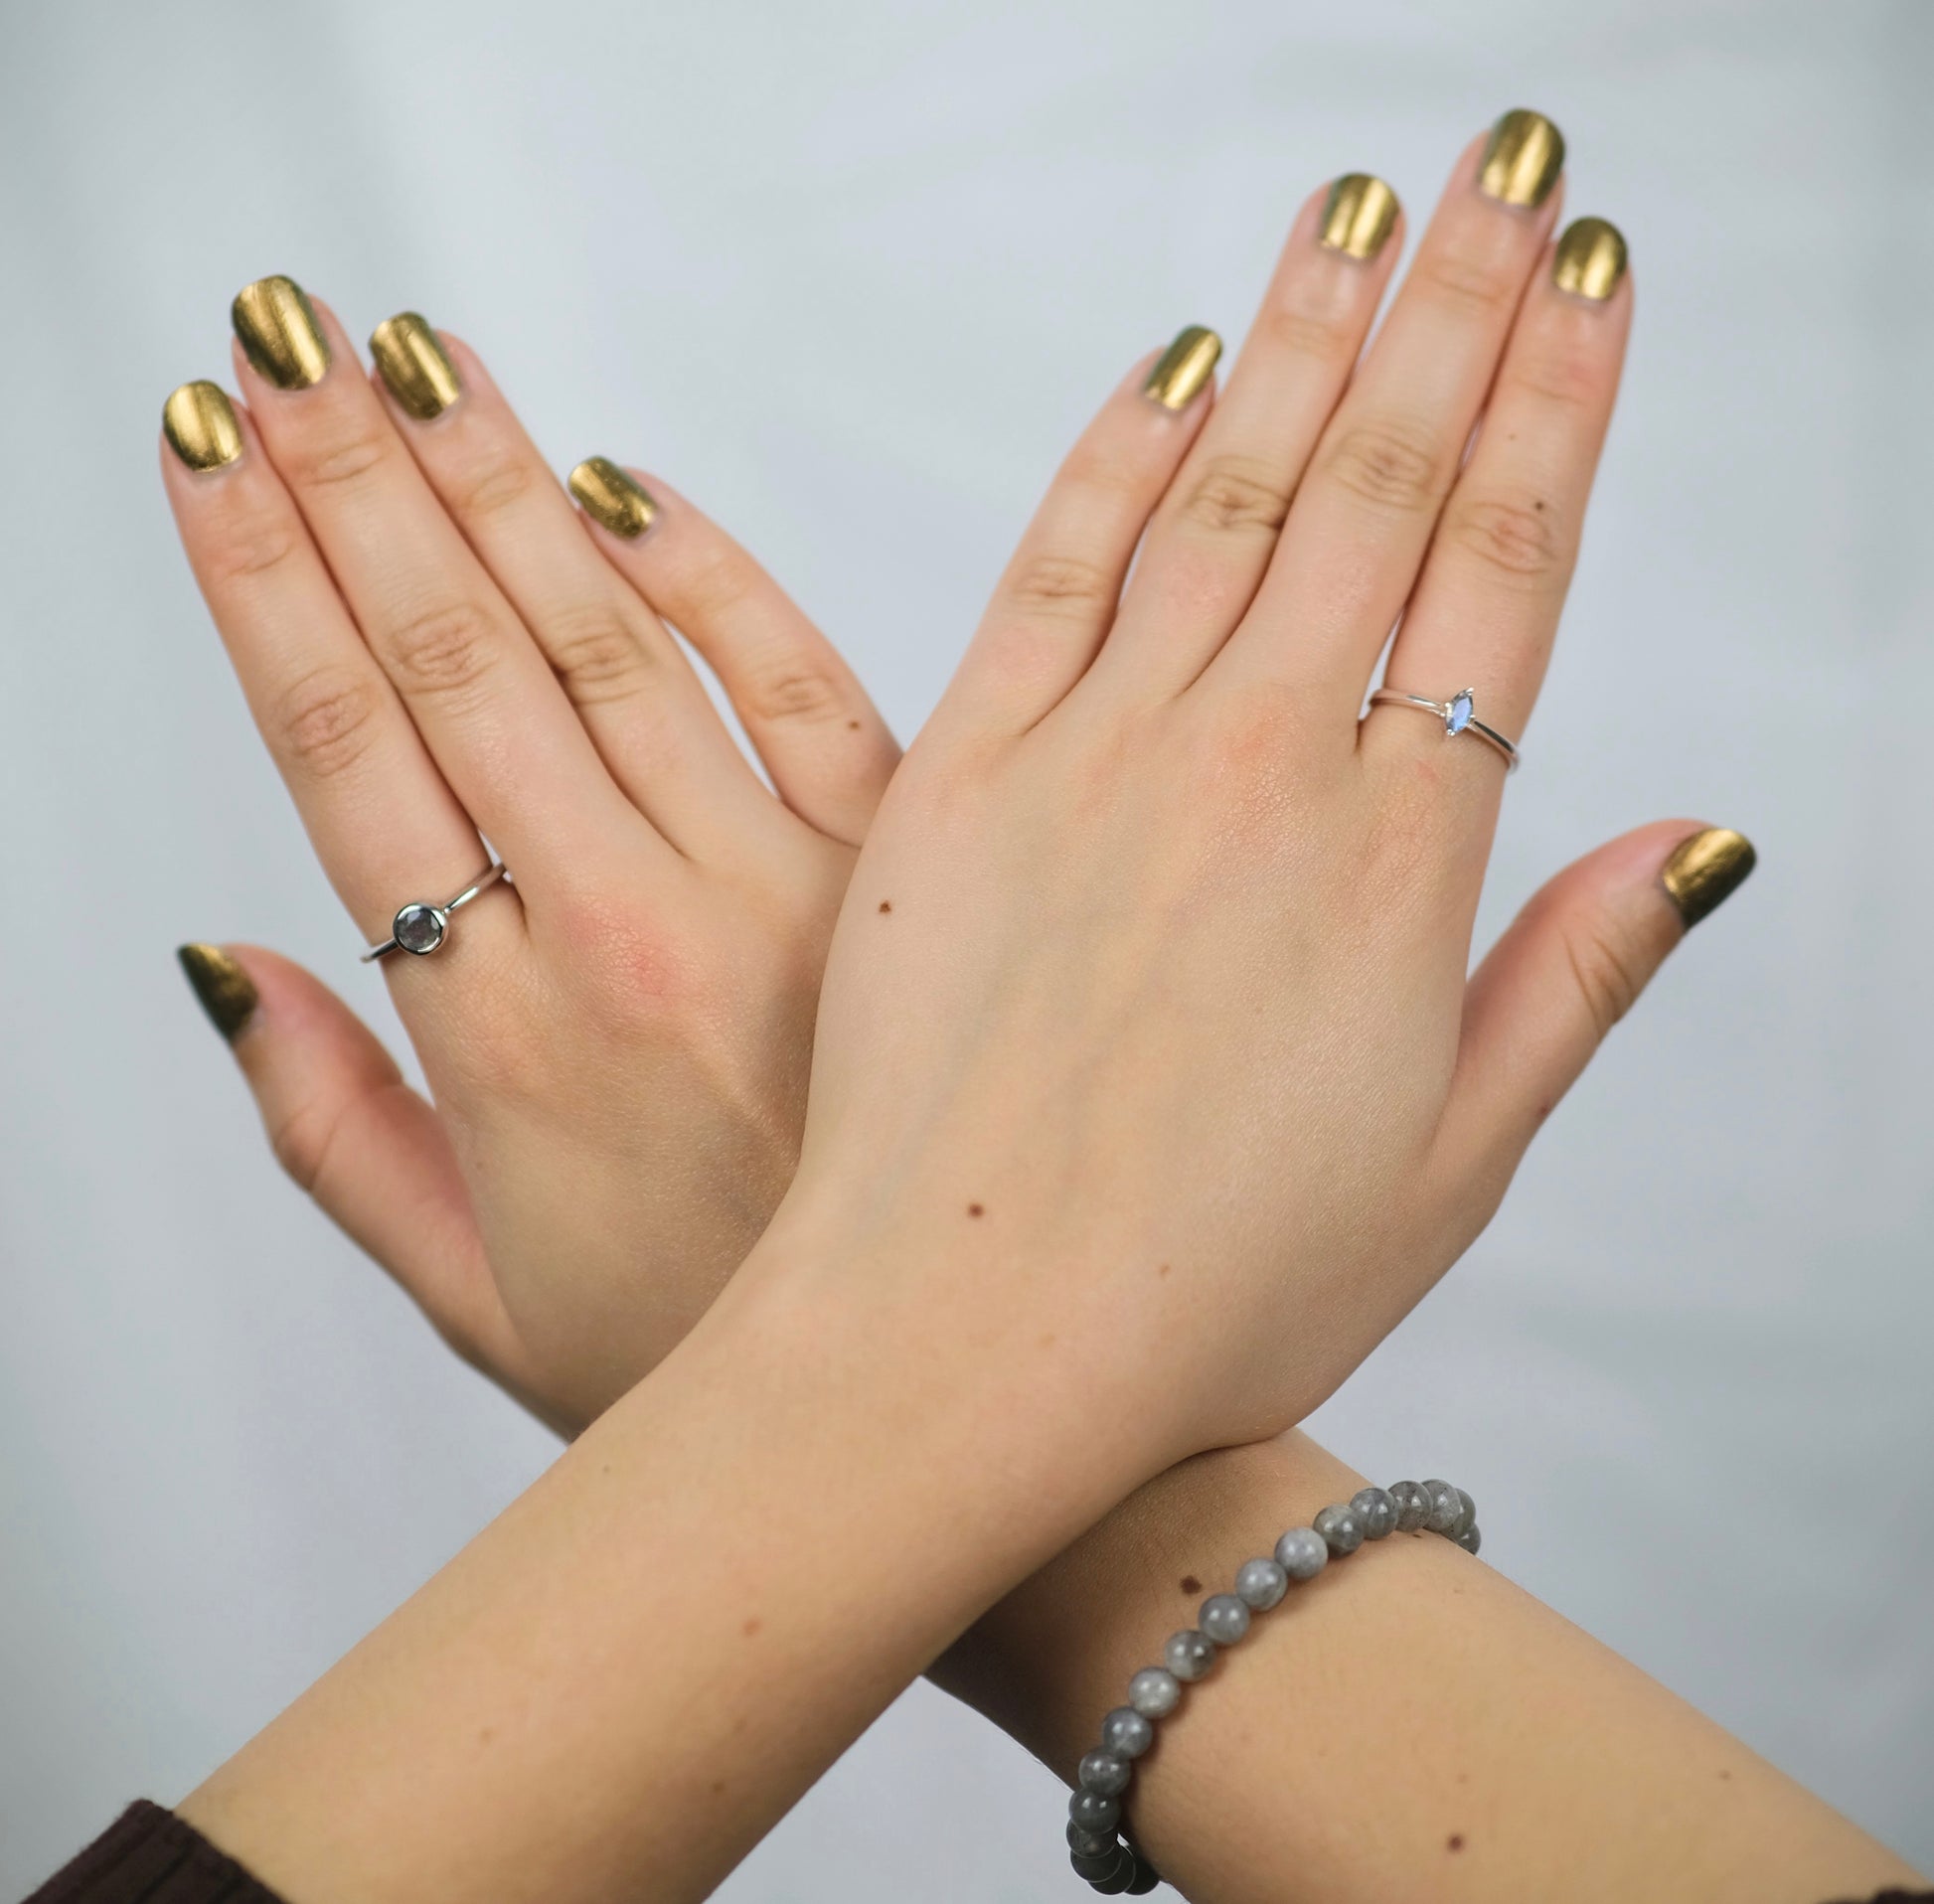 A model wearing labradorite gemstone rings and a bracelet